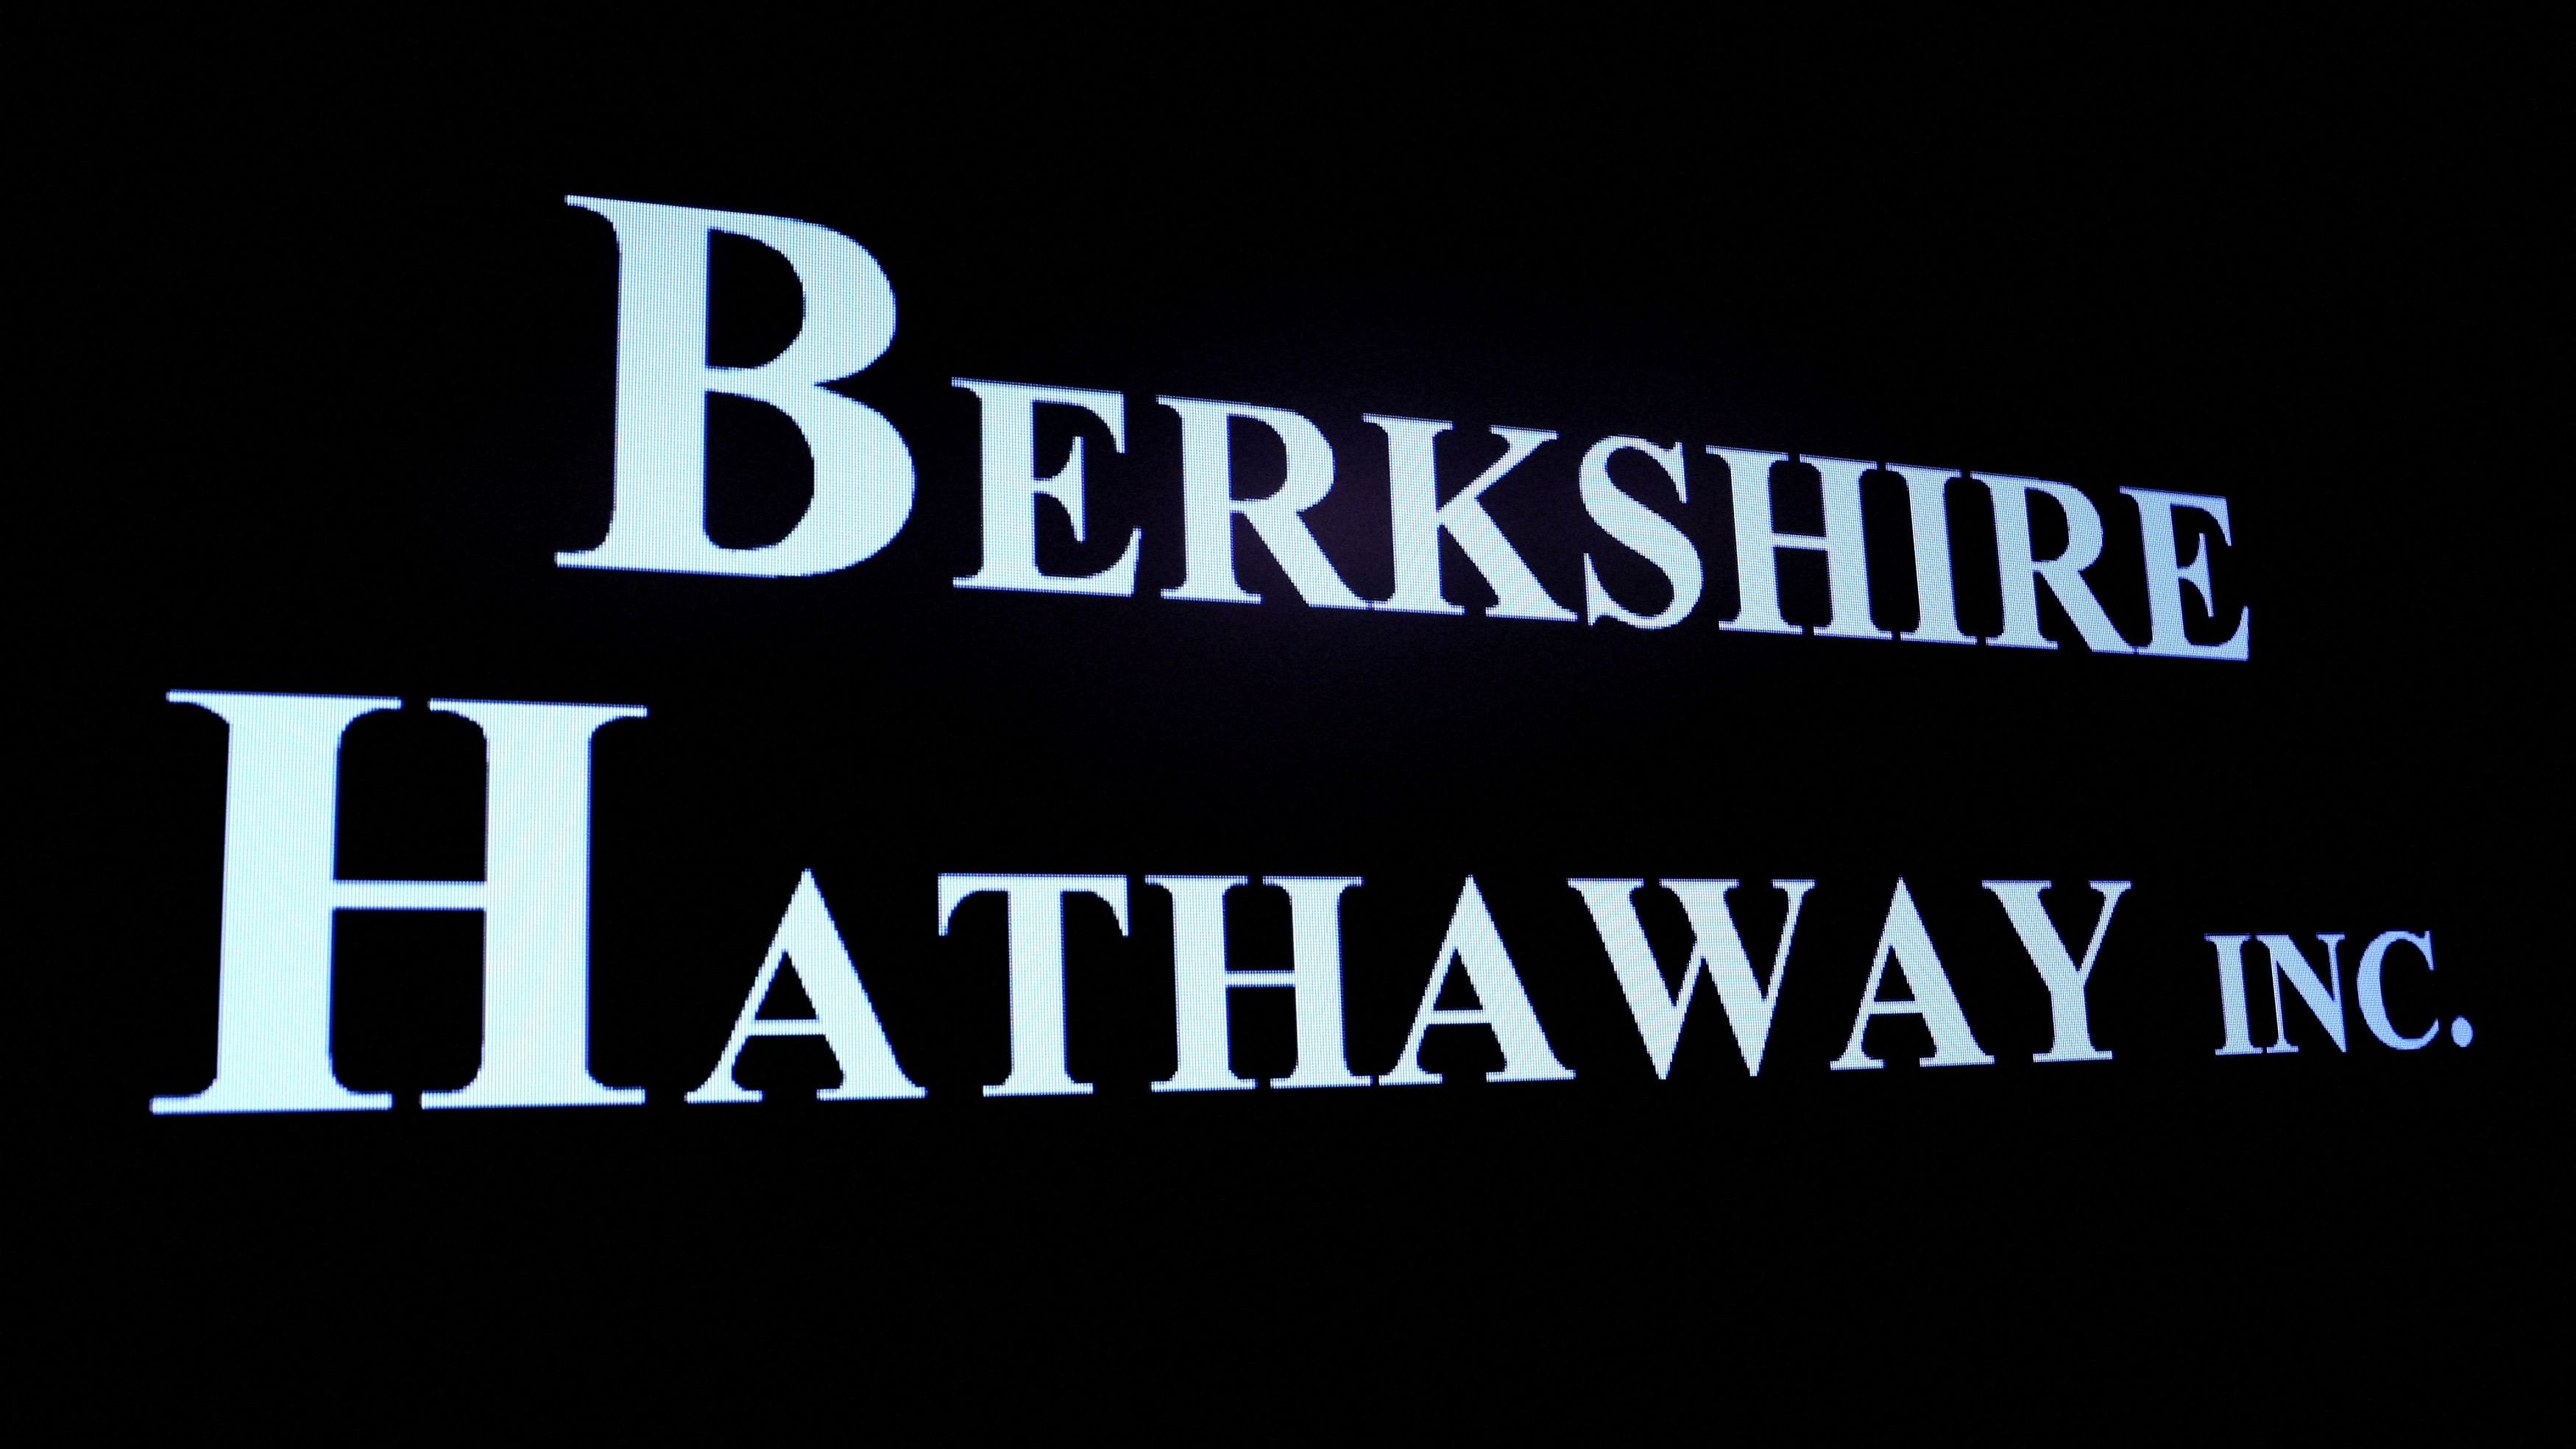 <div class="paragraphs"><p>Berkshire Hathaway logo</p></div>